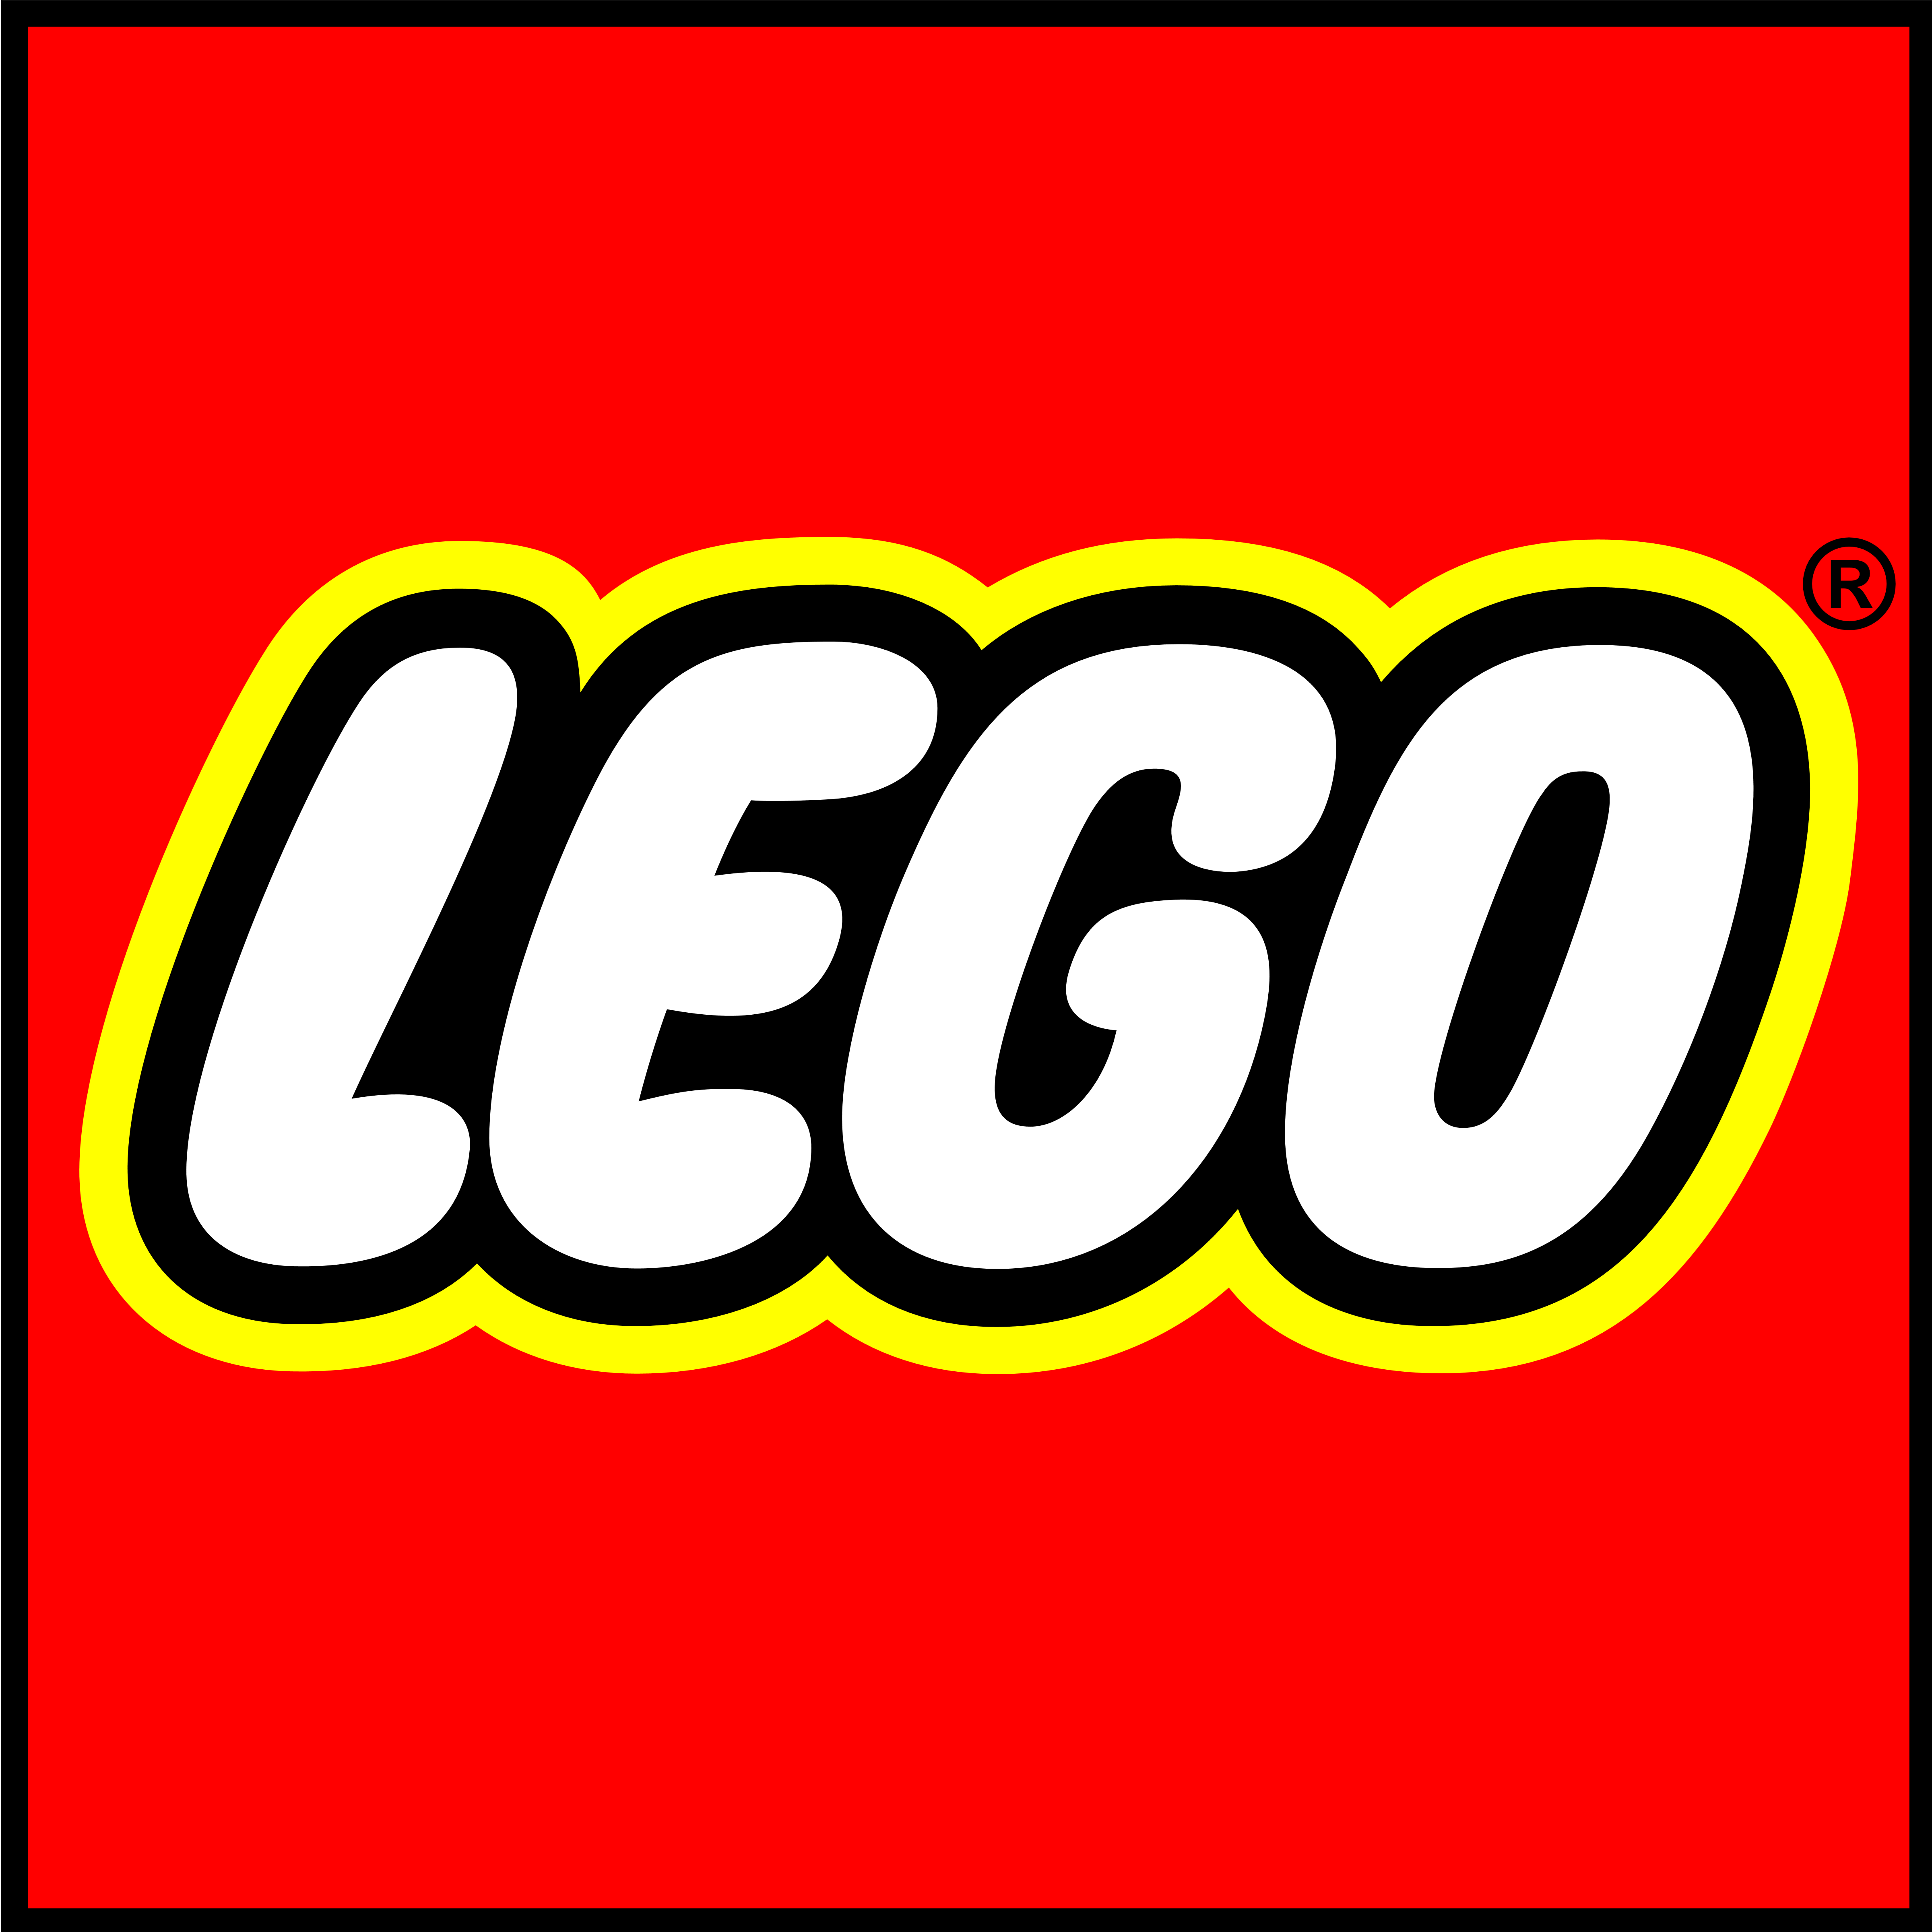 LEGO Logo Simple Background Red Yellow White Minimalism 4800x4800